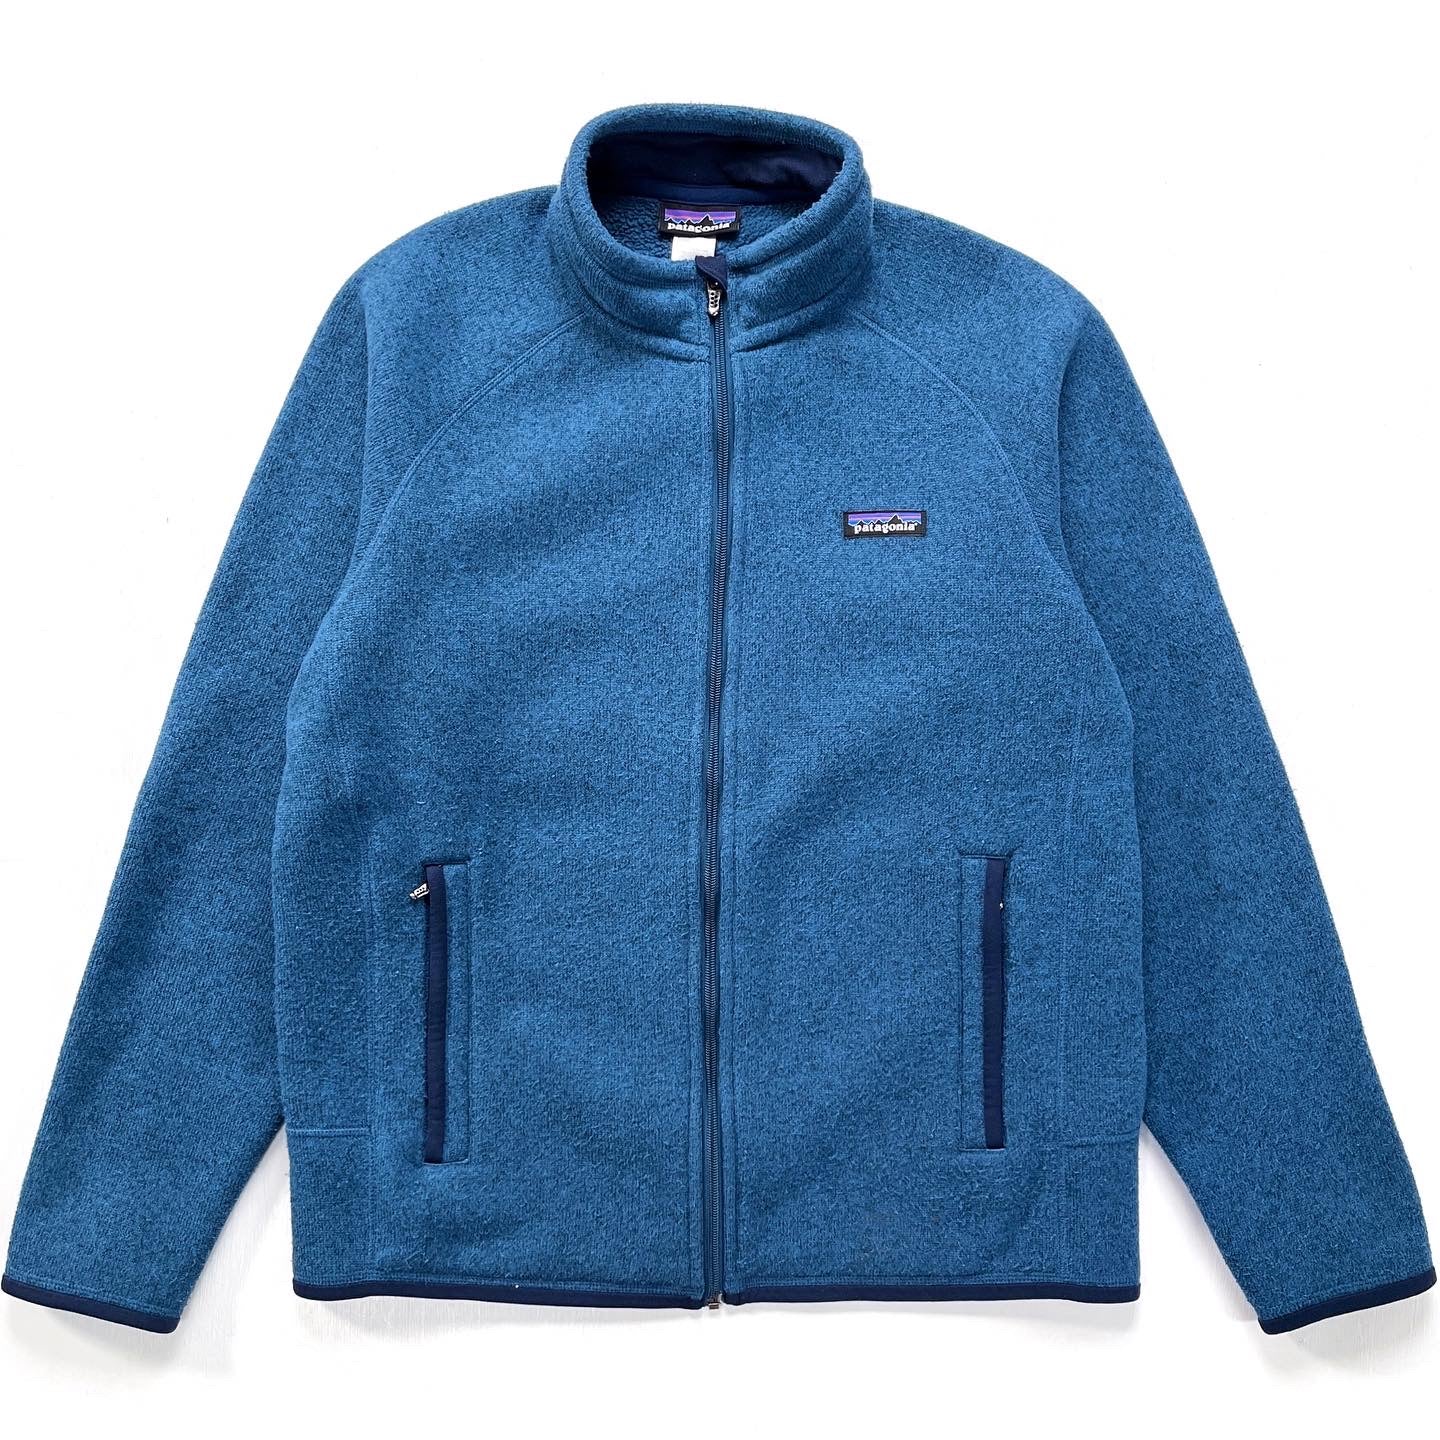 2014 Patagonia Mens Better Sweater Full-Zip Fleece Jacket, Blue (M)